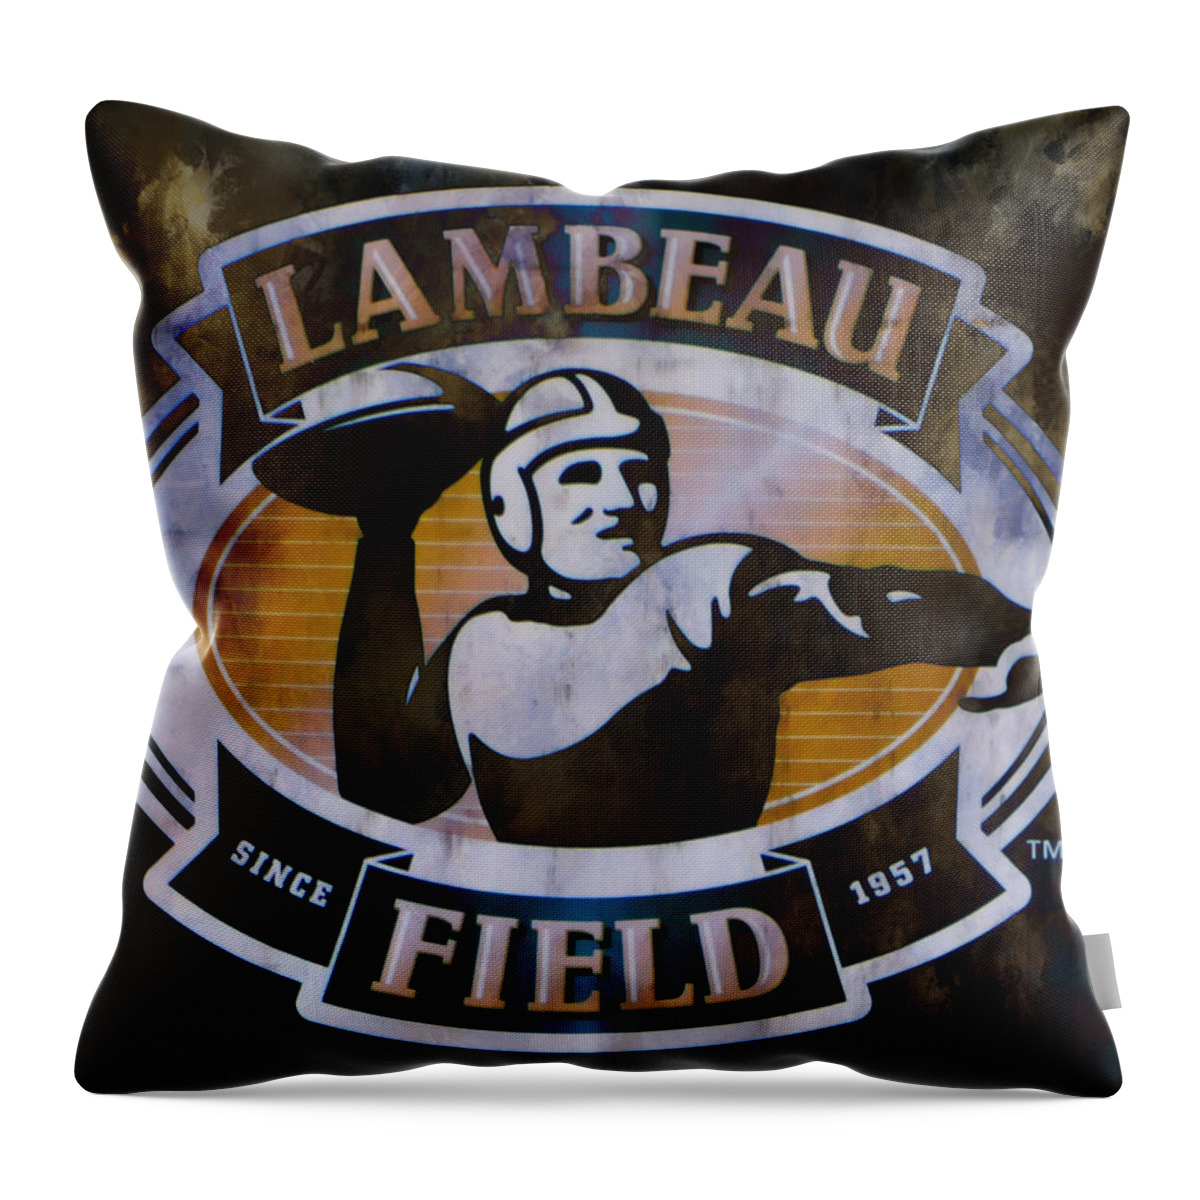 Lambeau Throw Pillow featuring the photograph Lambeau Field by Deena Stoddard